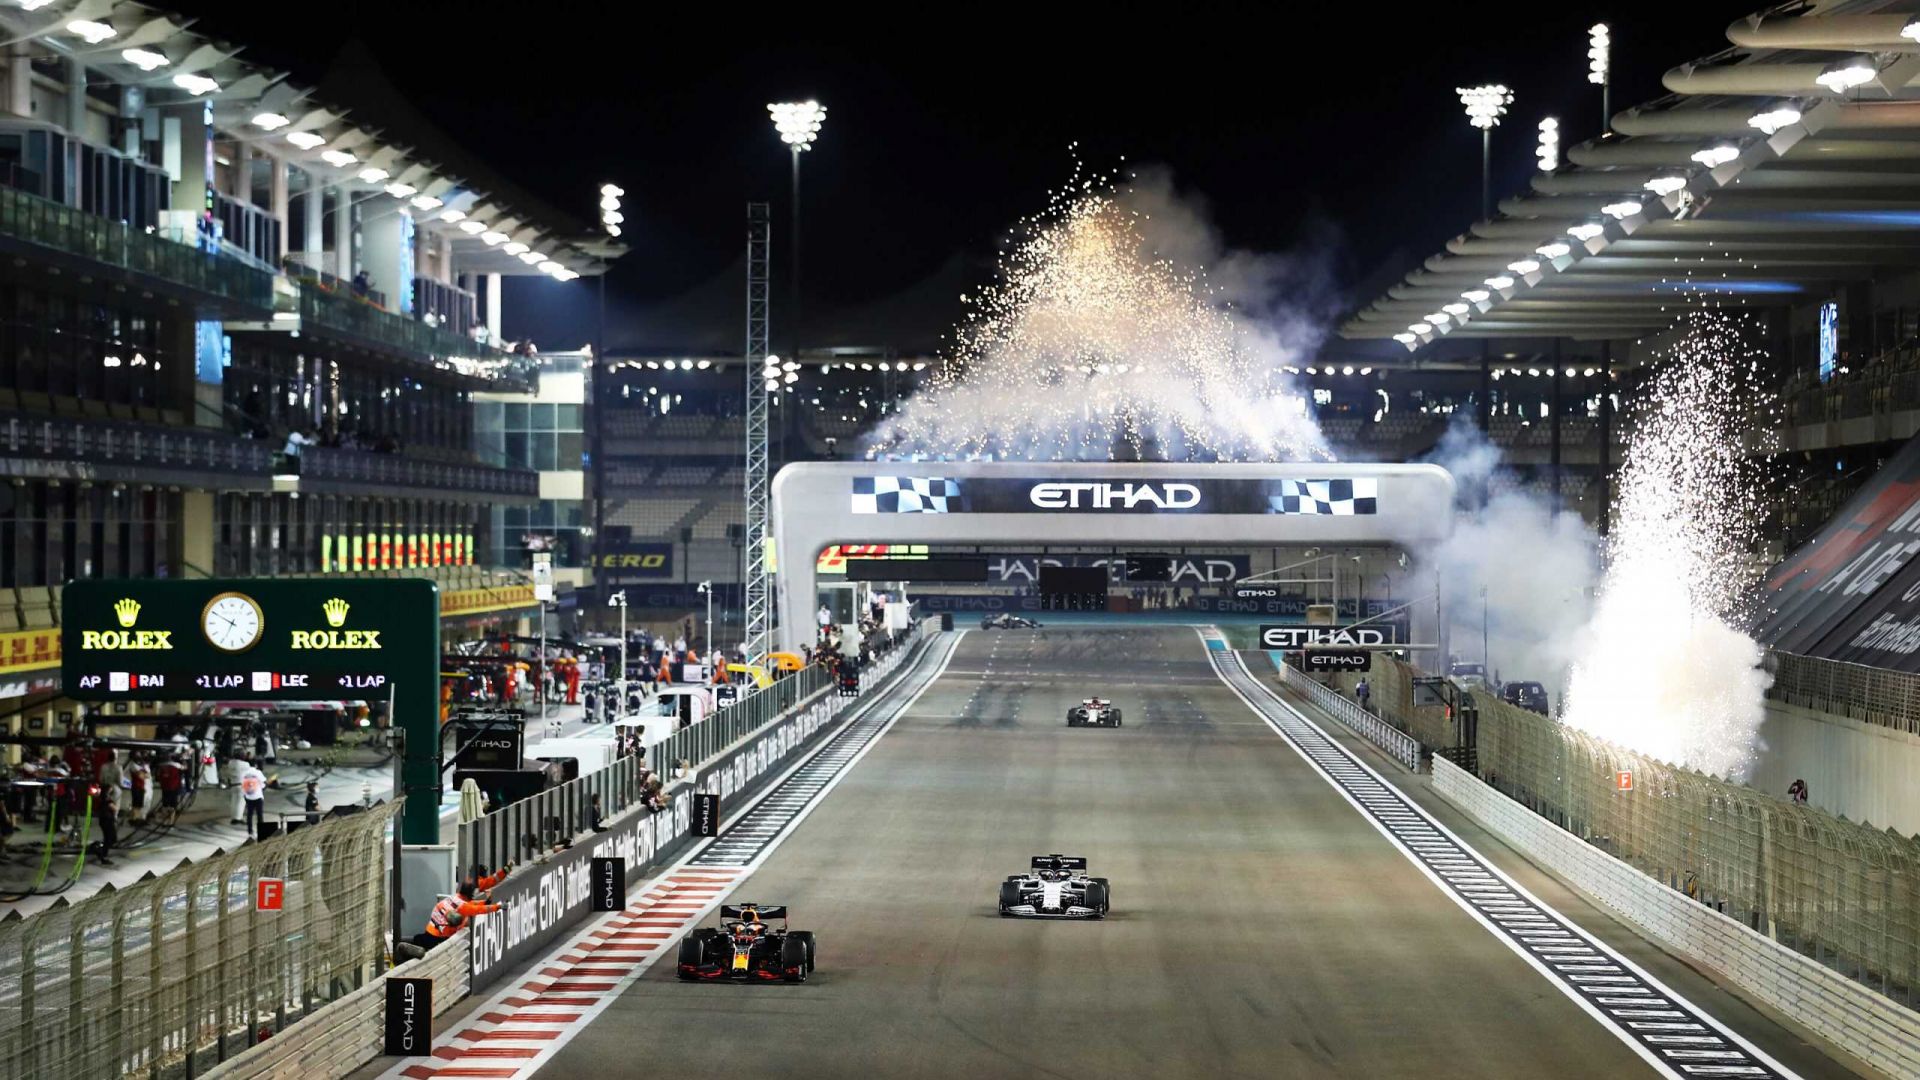 Max Verstappen wins the 2020 Abu Dhabi Grand Prix